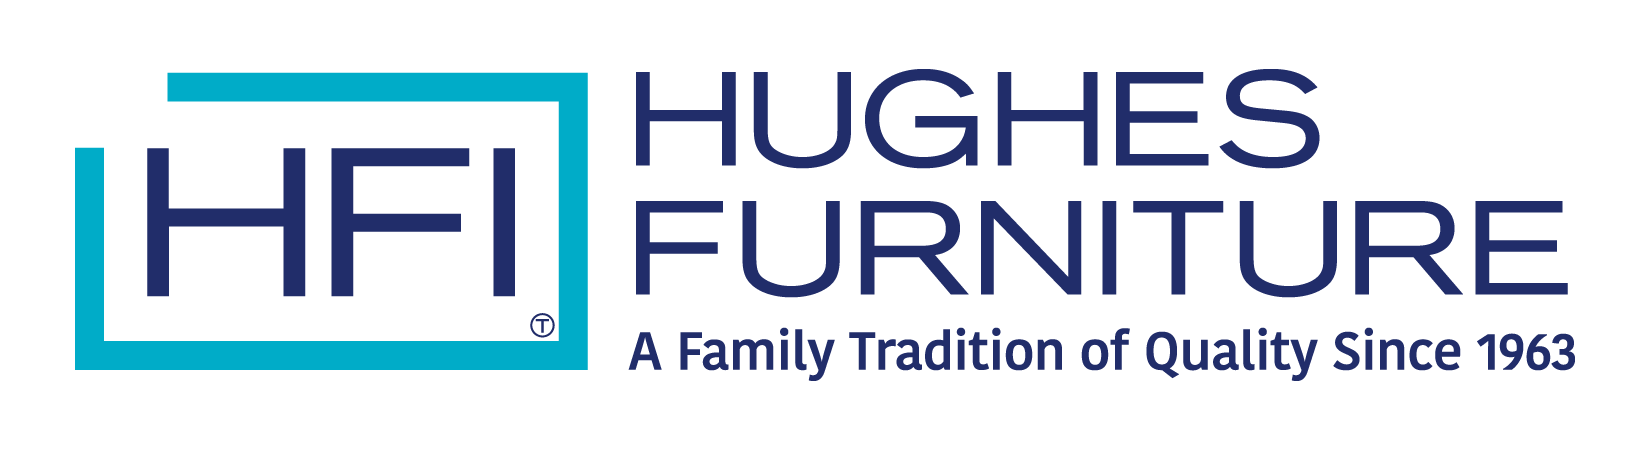 Hughes Furniture logo